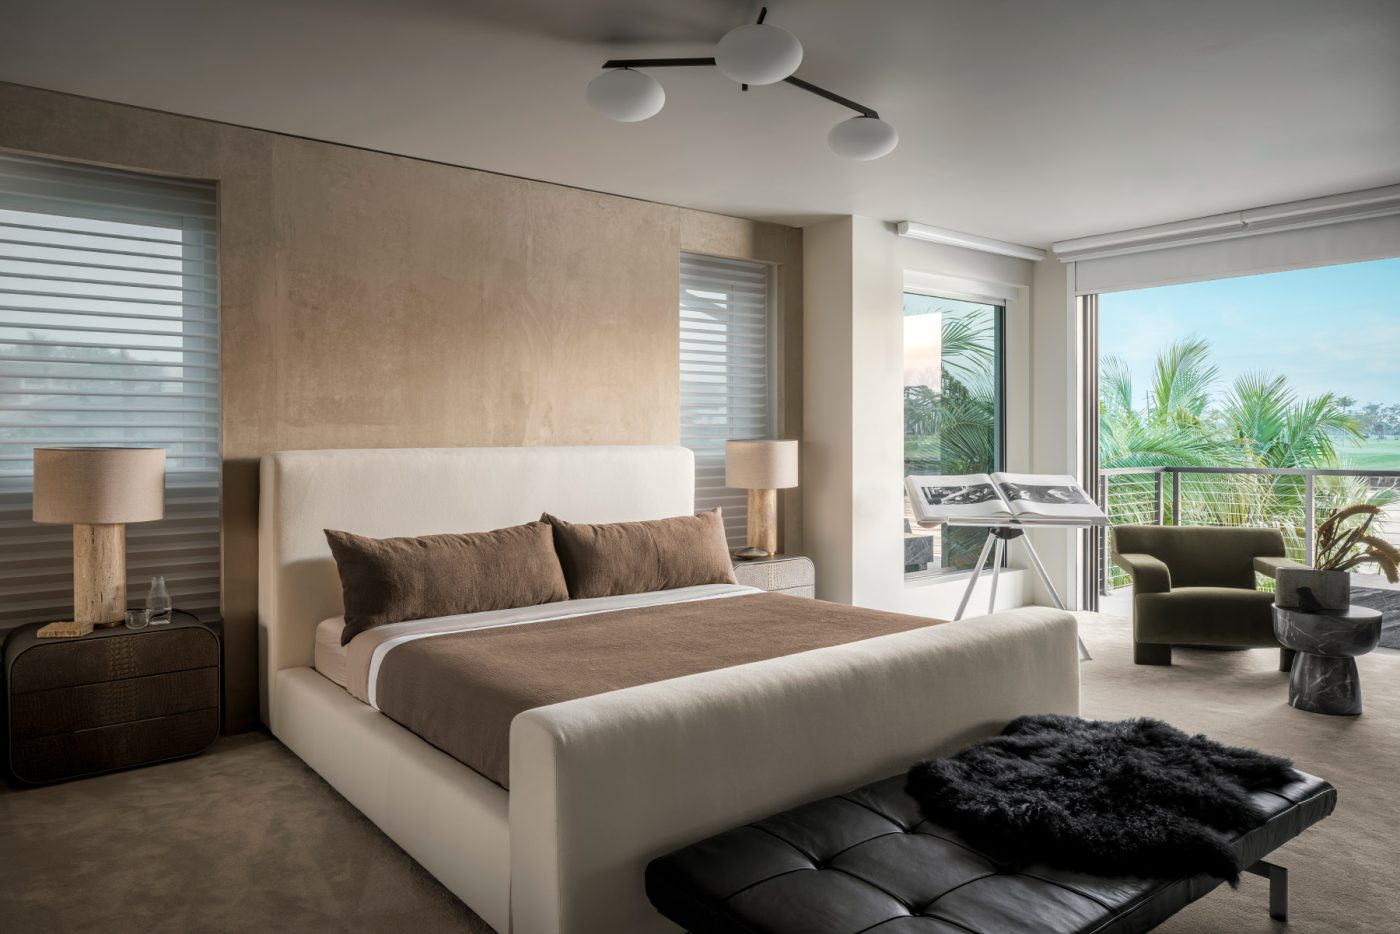 Primary bedroom of Miami beach home designed by Duett Interiors' Tiffany Thompson 